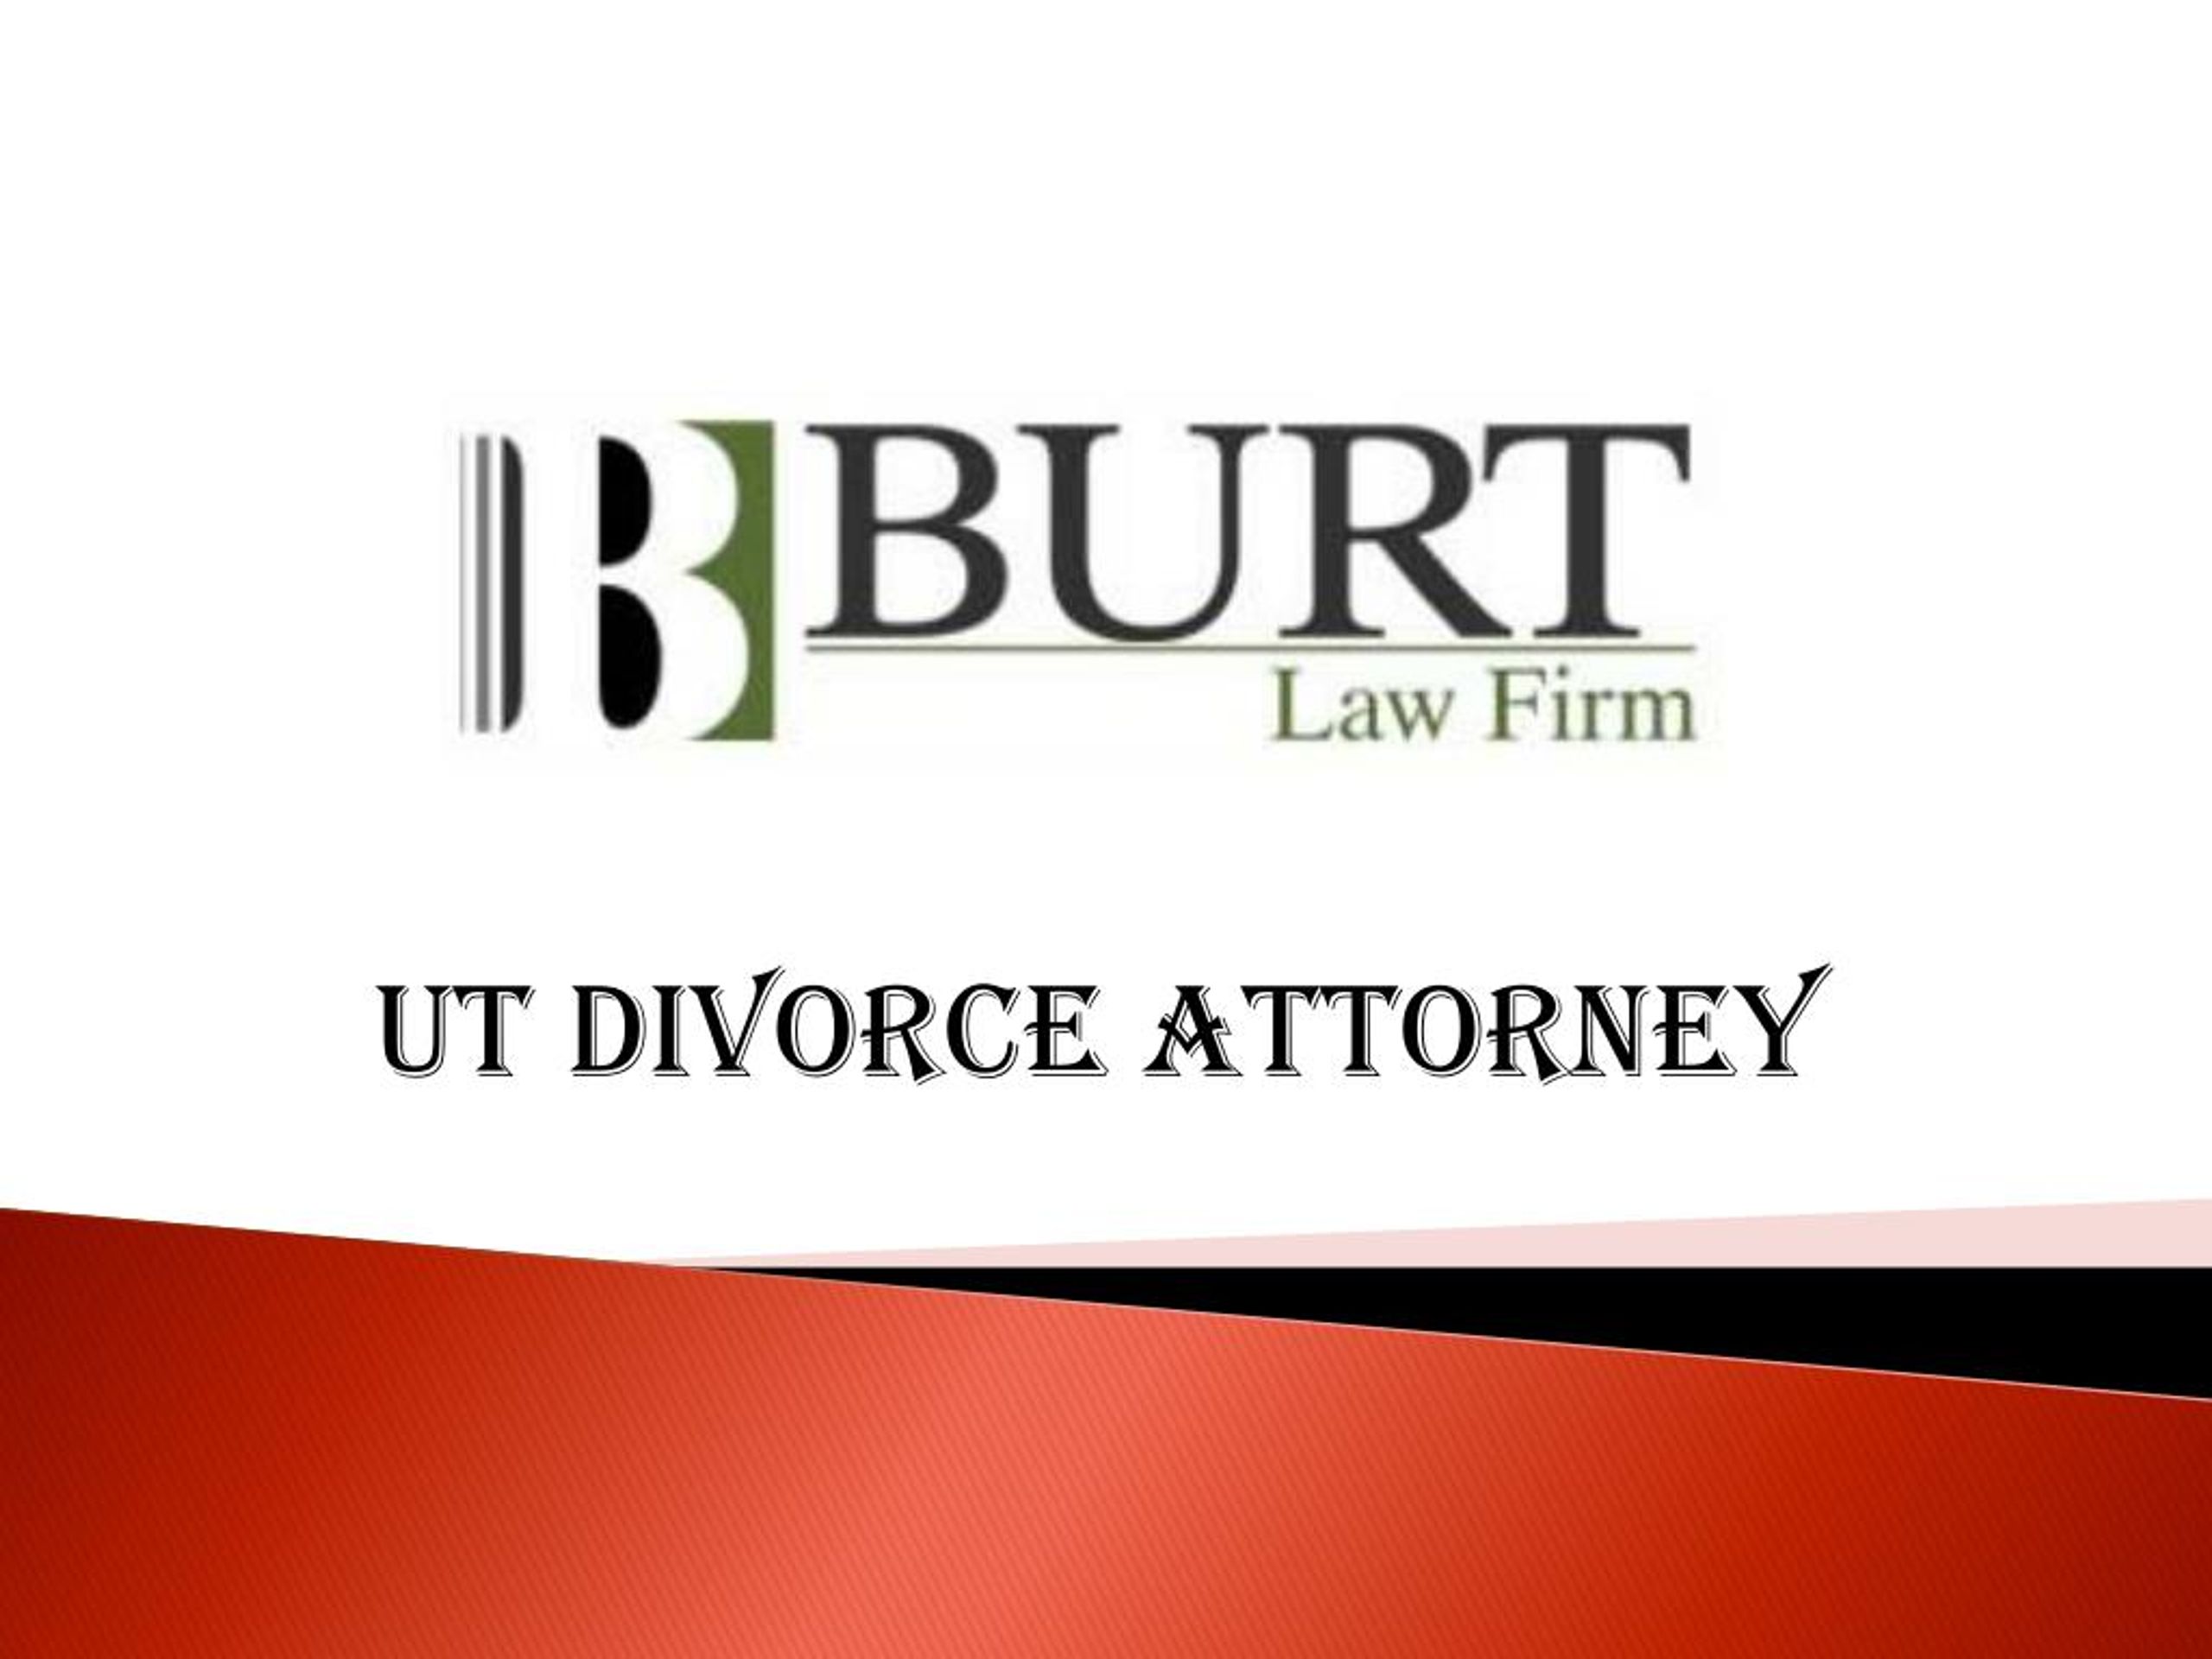 PPT Divorce Attorney Utah Utdivorces com PowerPoint Presentation